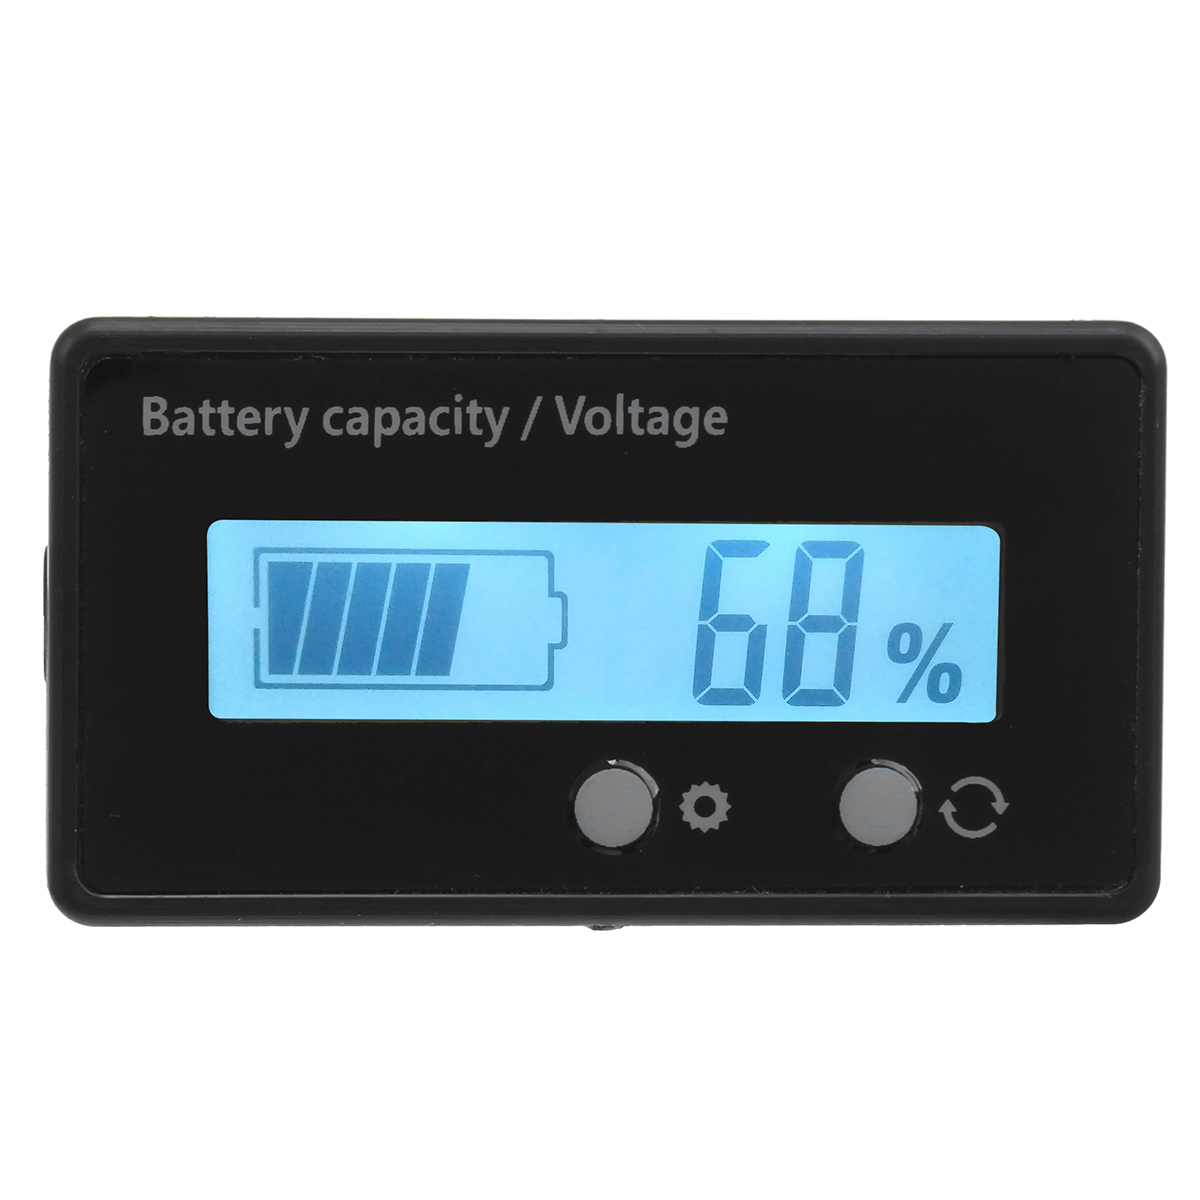 Battery capacity indicator Digital Voltmeter. Вольтметр BZK 8.860.137/2 Test AC 2000v 63l18. Battery capacity Voltage инструкция по настройке на русском.